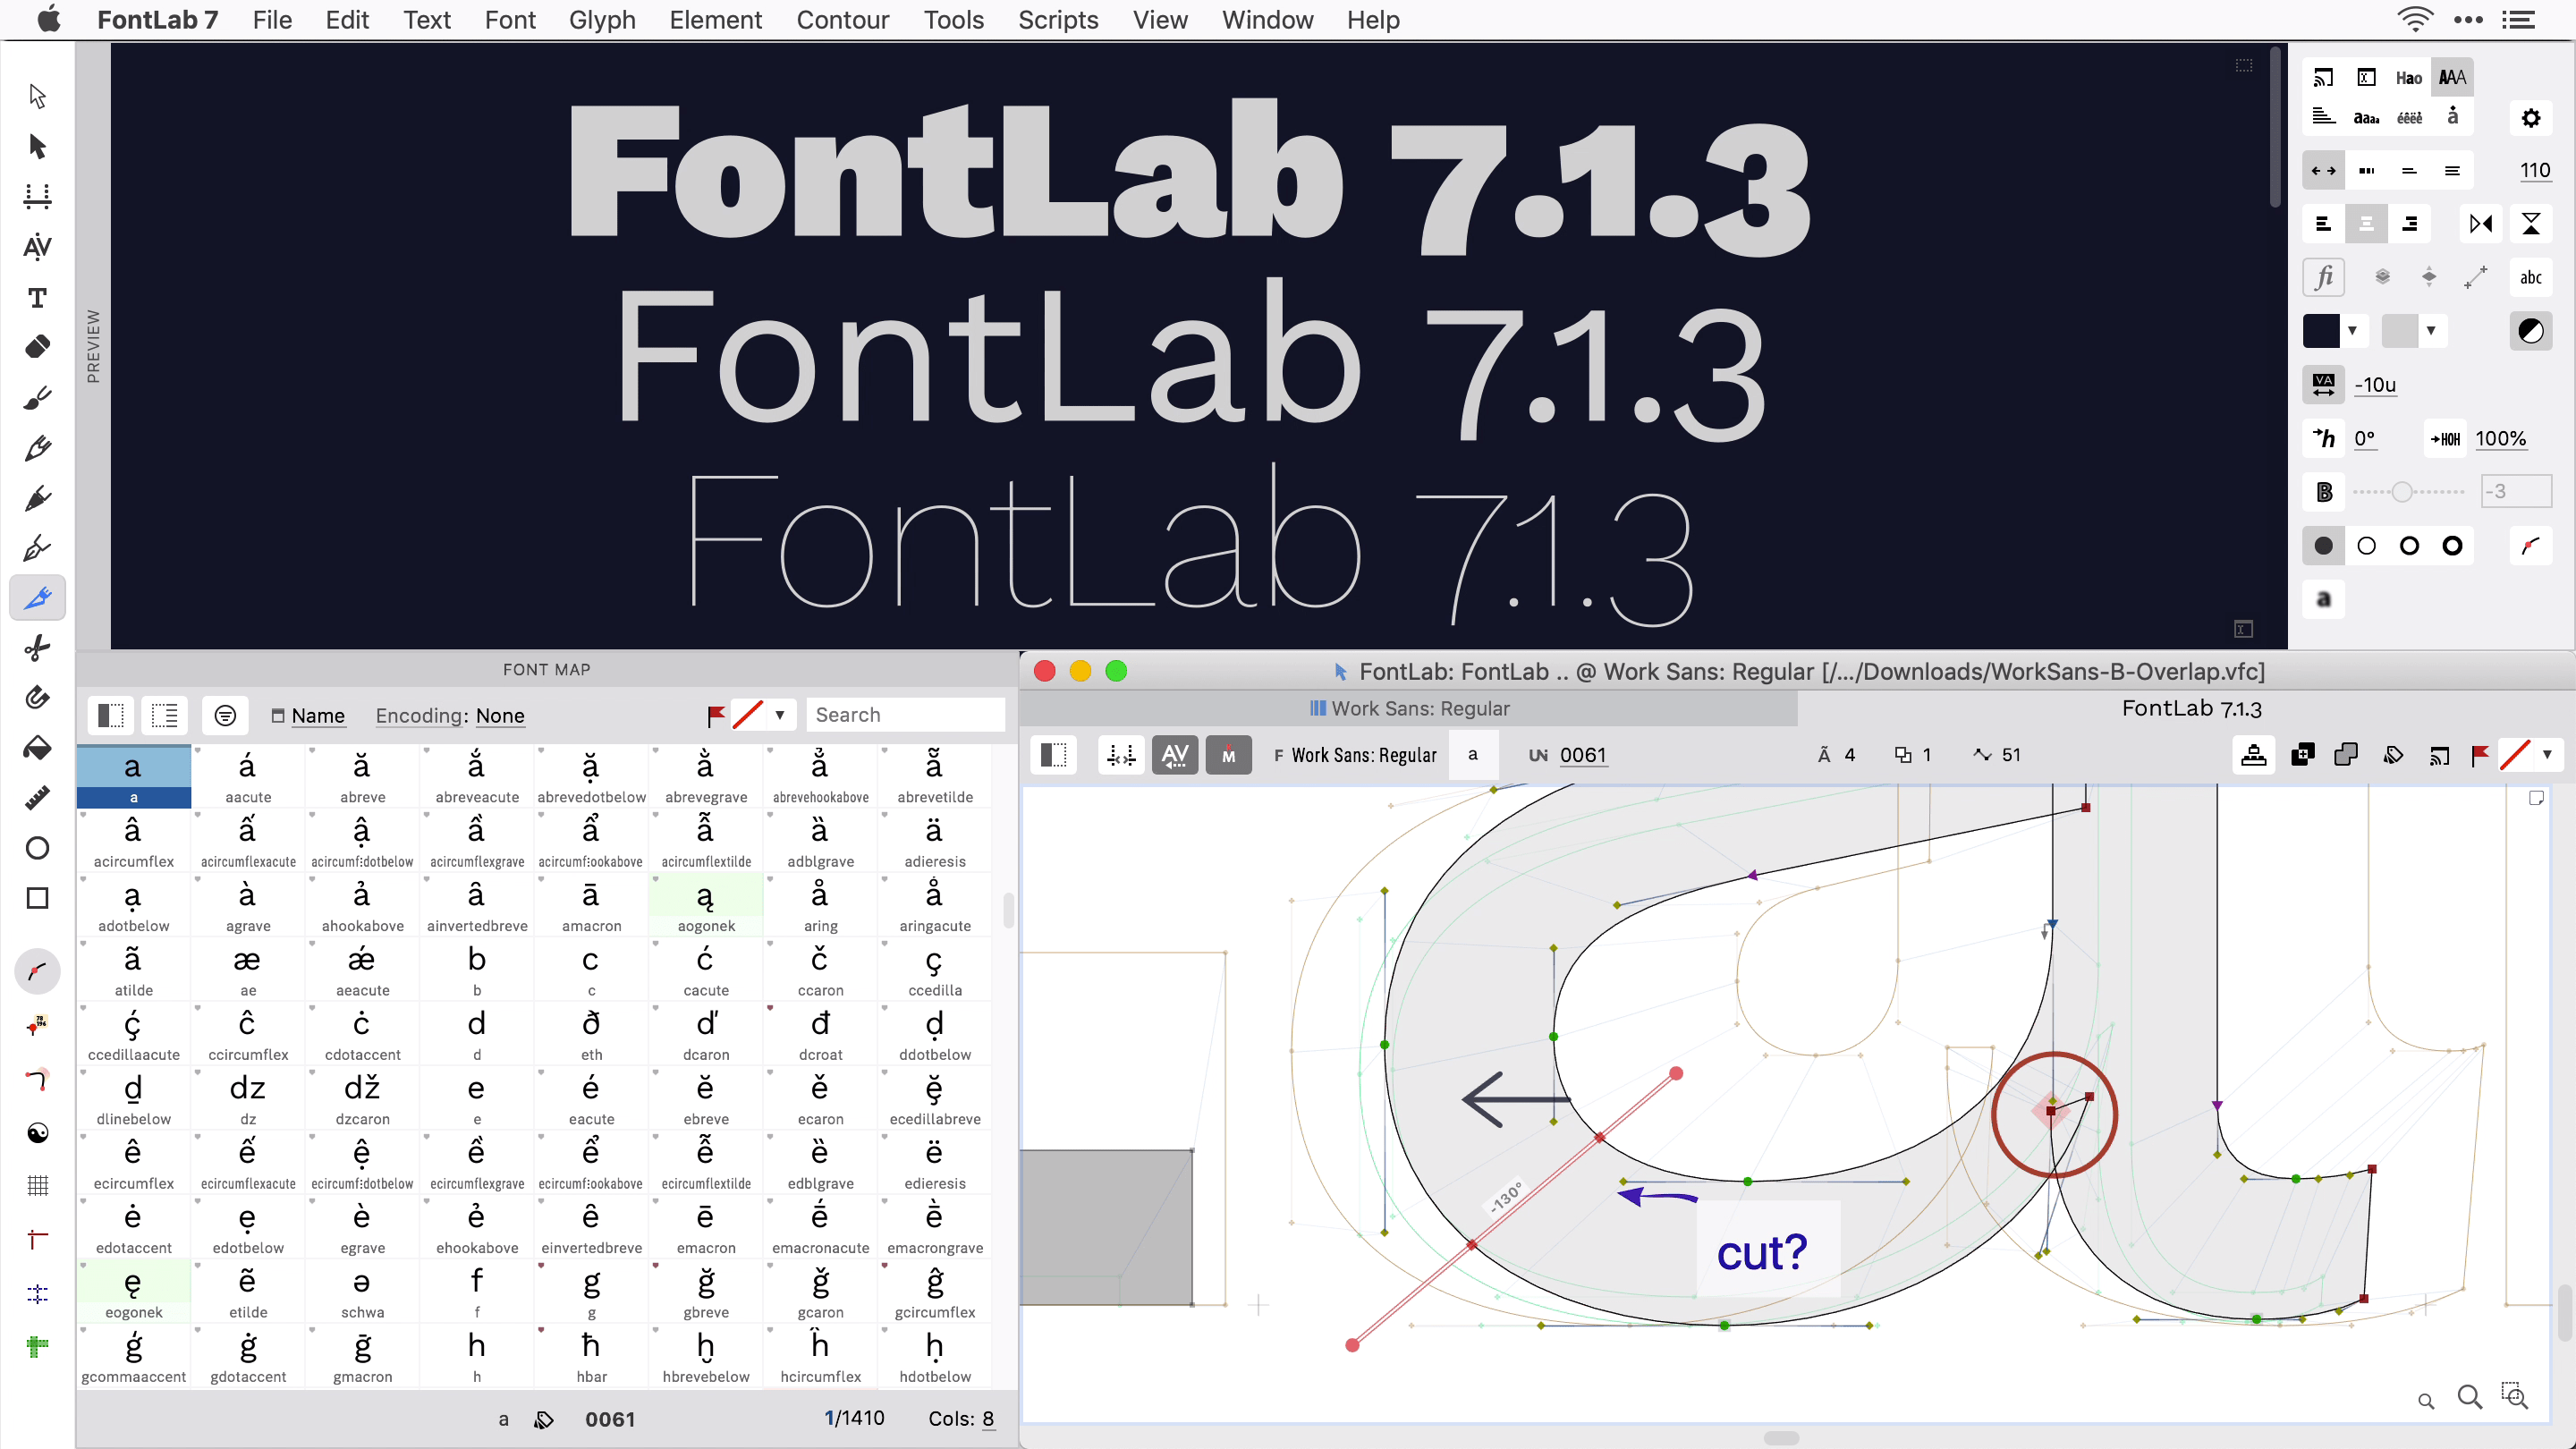 FontLab 7.1.3